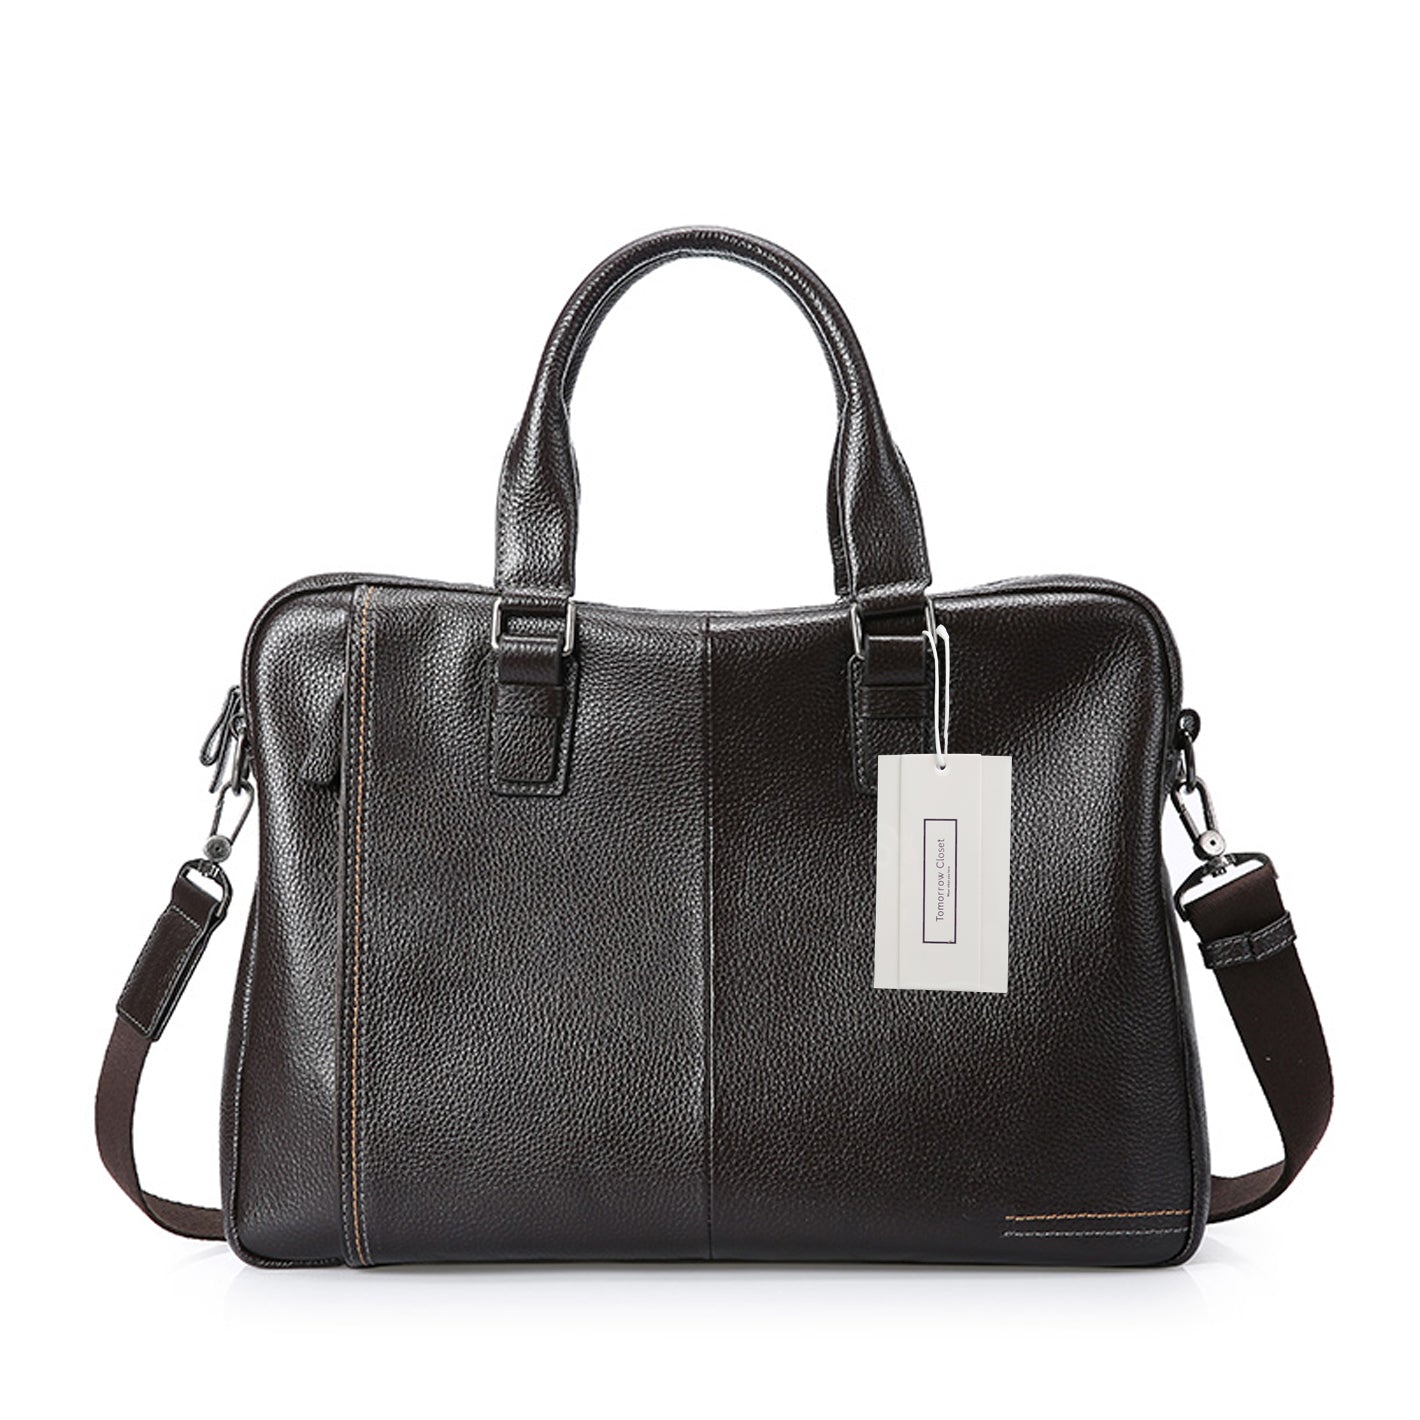 Unisex genuine cowhide leather top handle briefcase seam design by Tomorrow Closet